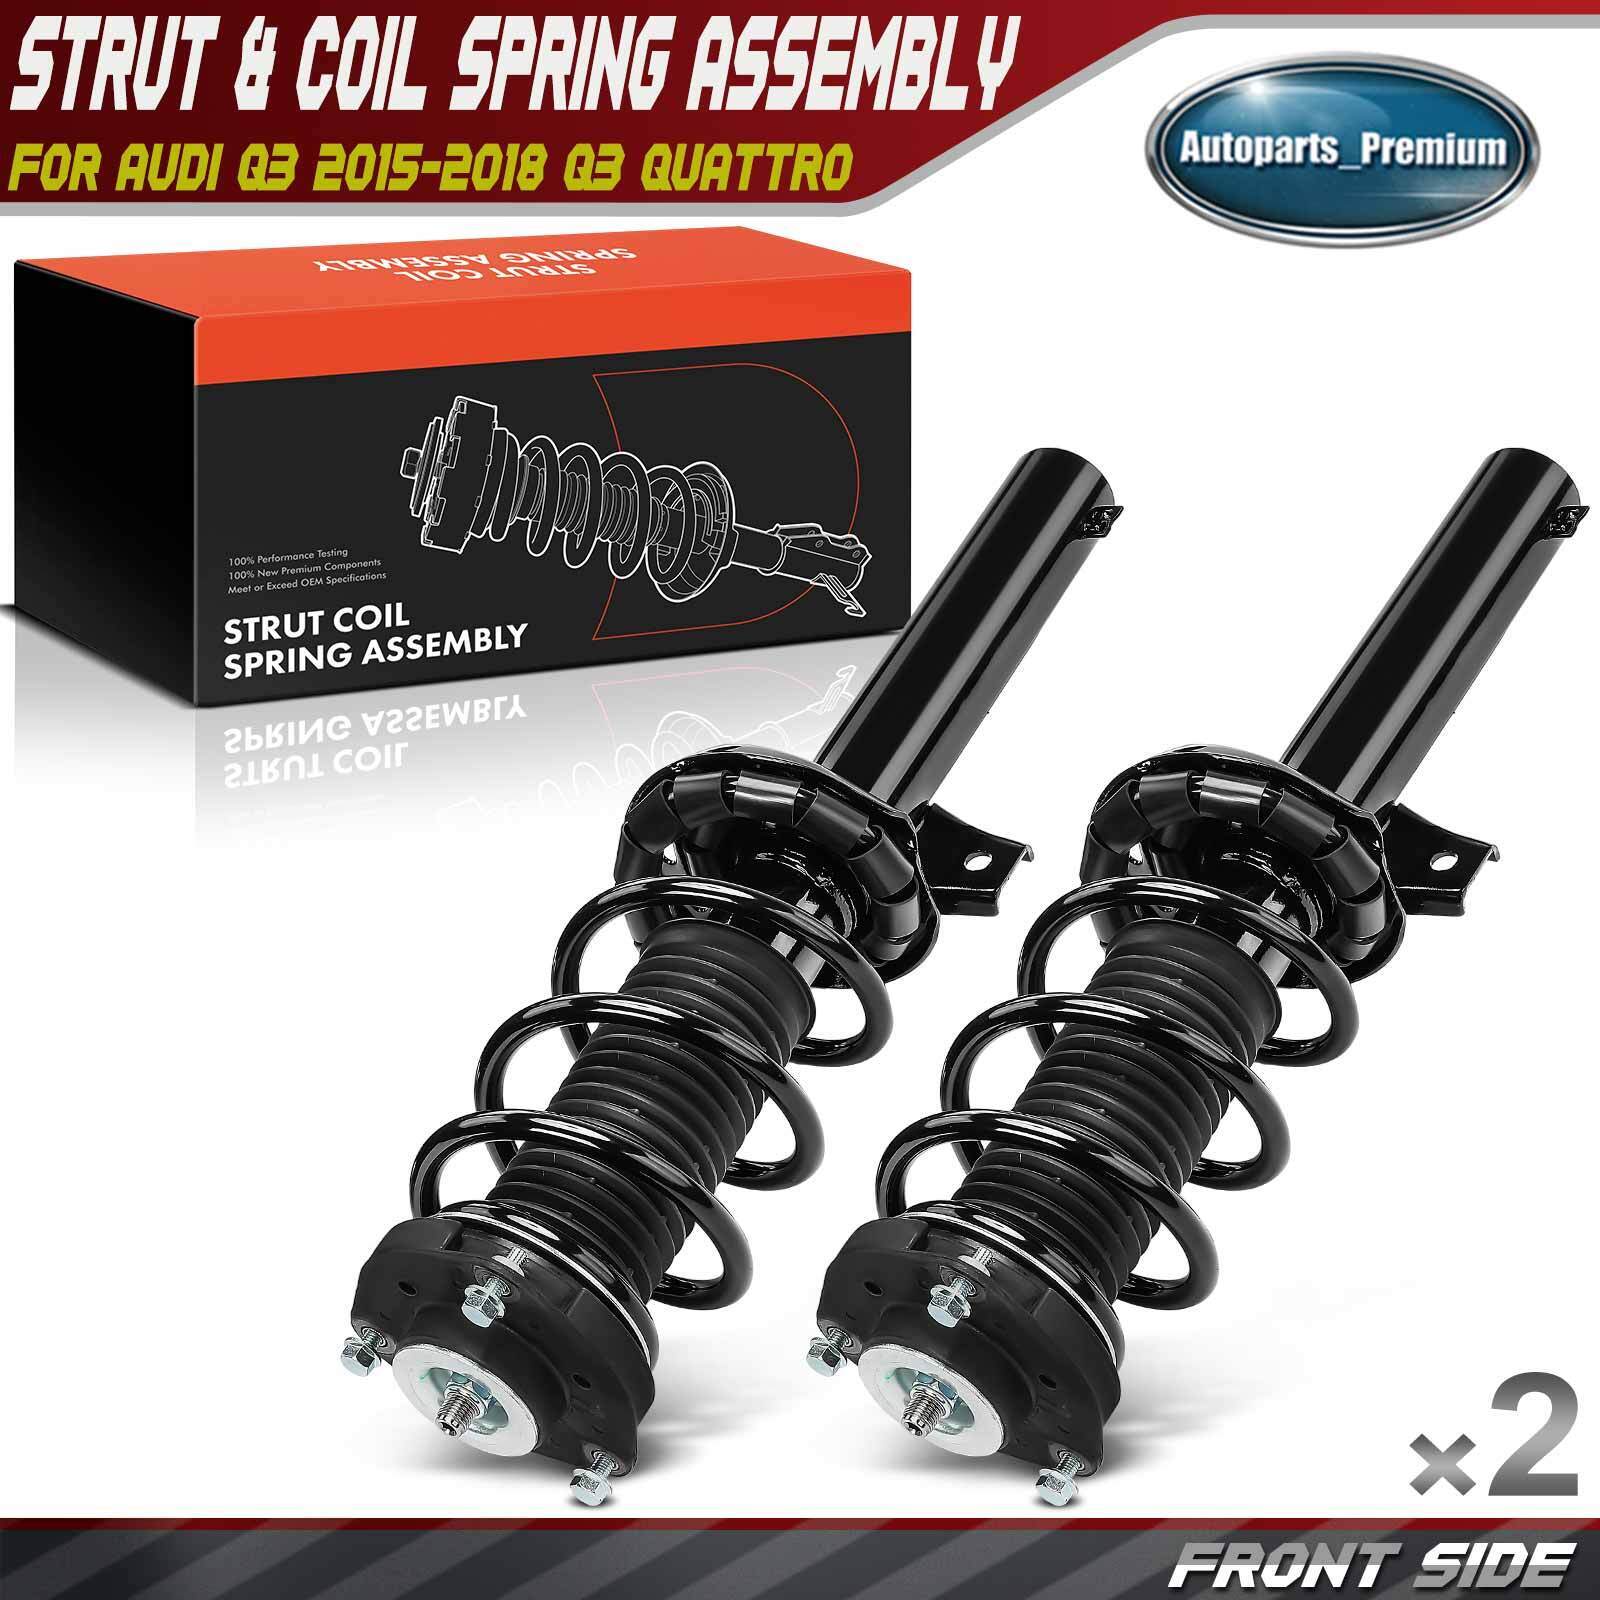 Front L & R Complete Strut & Coil Spring Assembly for Audi Q3 15-18 Q3 Quattro